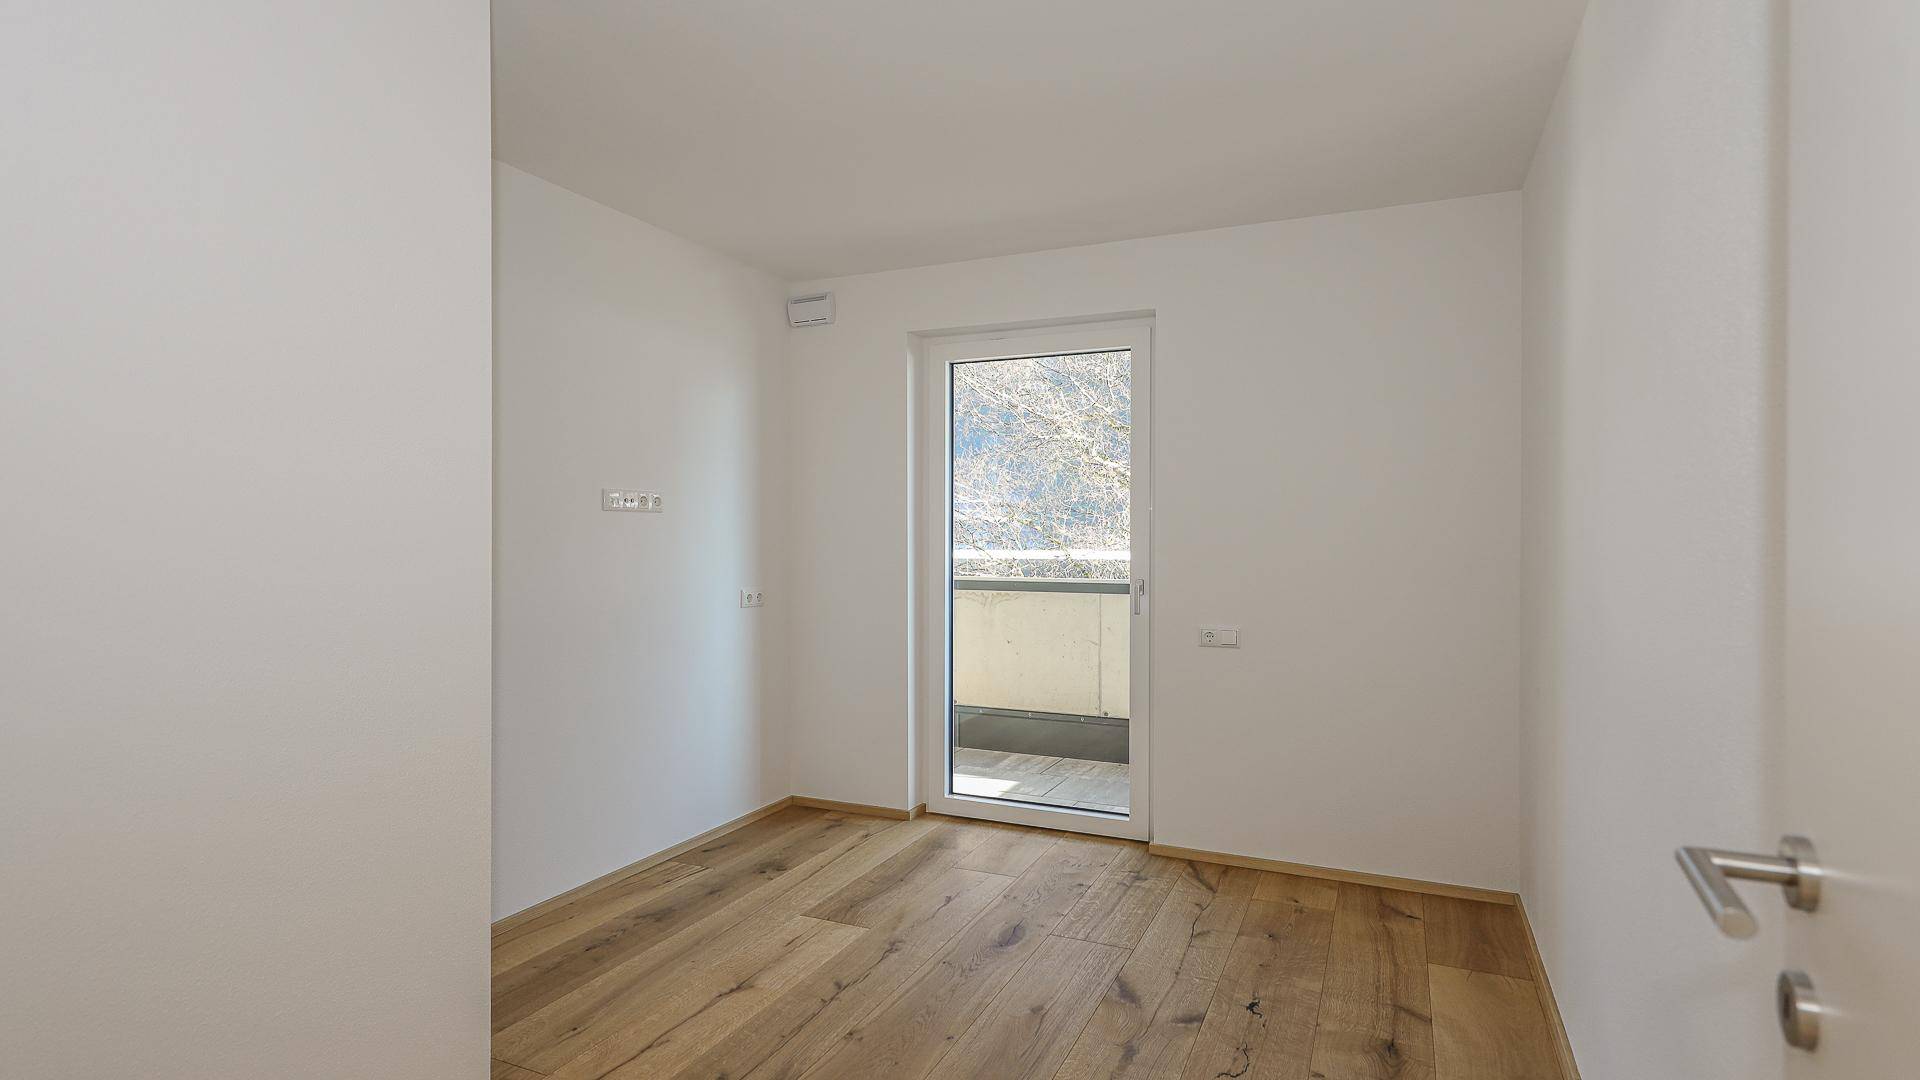 KITZIMMO-Neubau-Penthouse in sonniger Lage kaufen - Immobilien Kirchdorf Tirol.